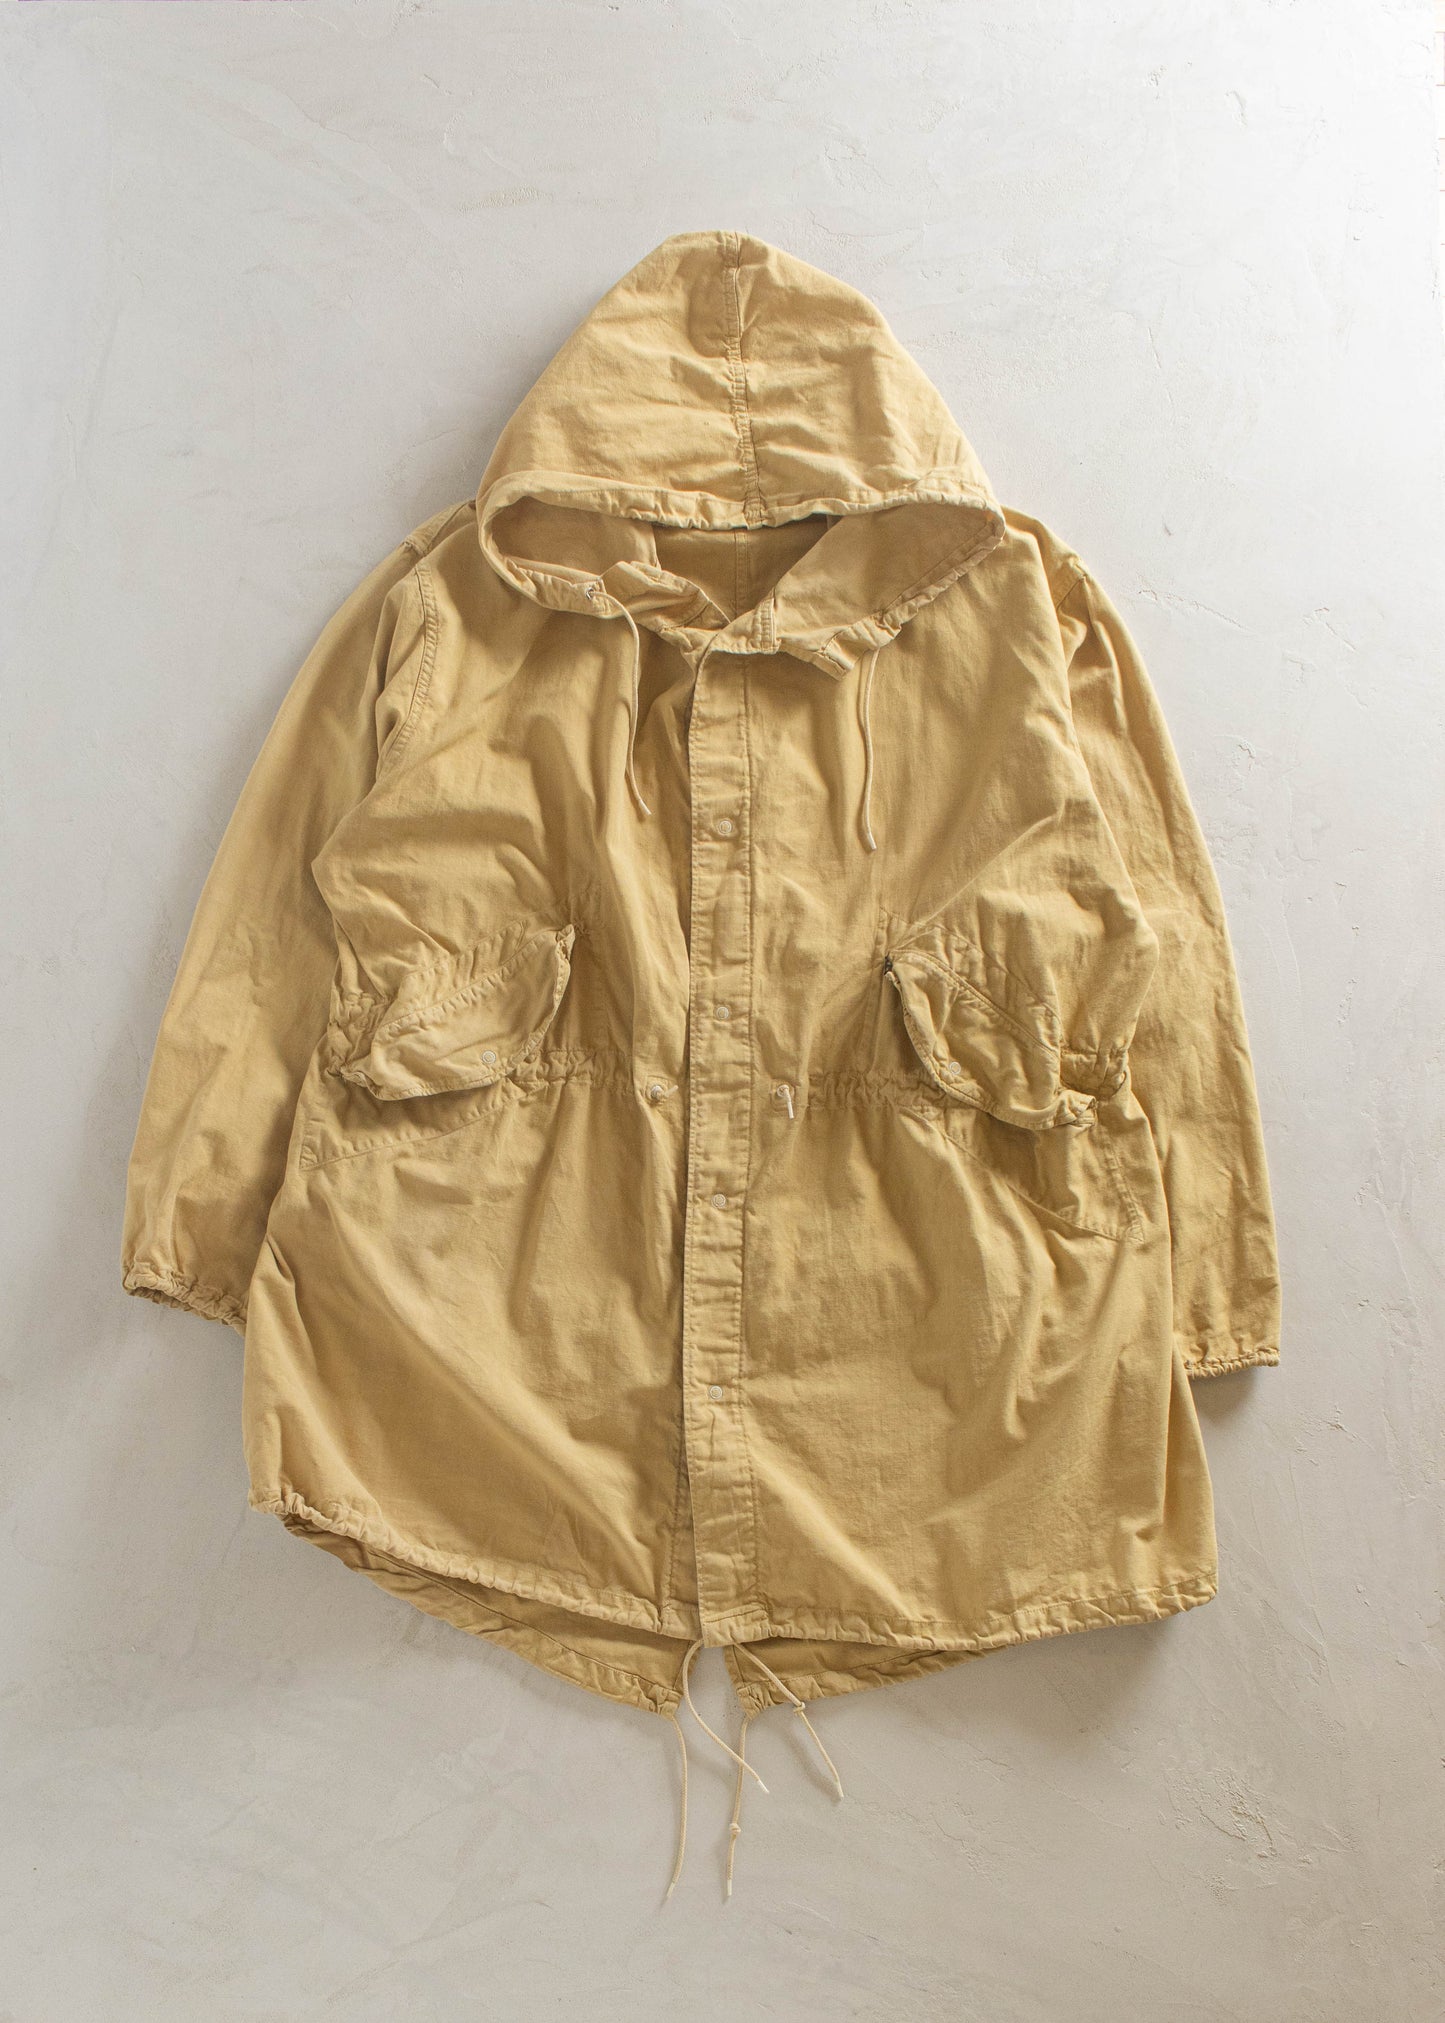 1980s A.T & Co Fishtail Jacket Size 2XL/3XL